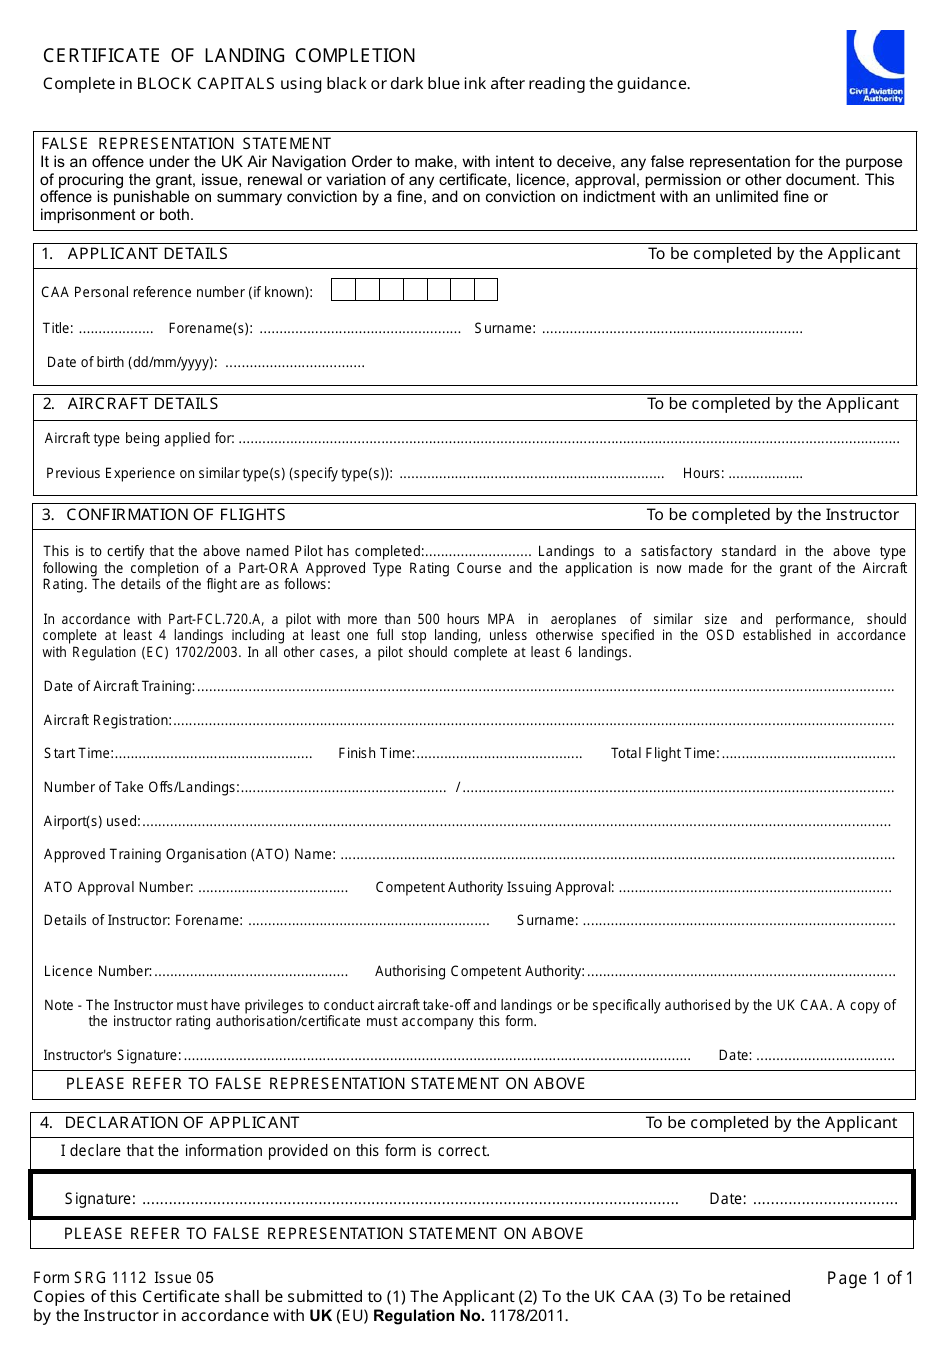 Form SRG1112 Certificate of Landing Completion - United Kingdom, Page 1